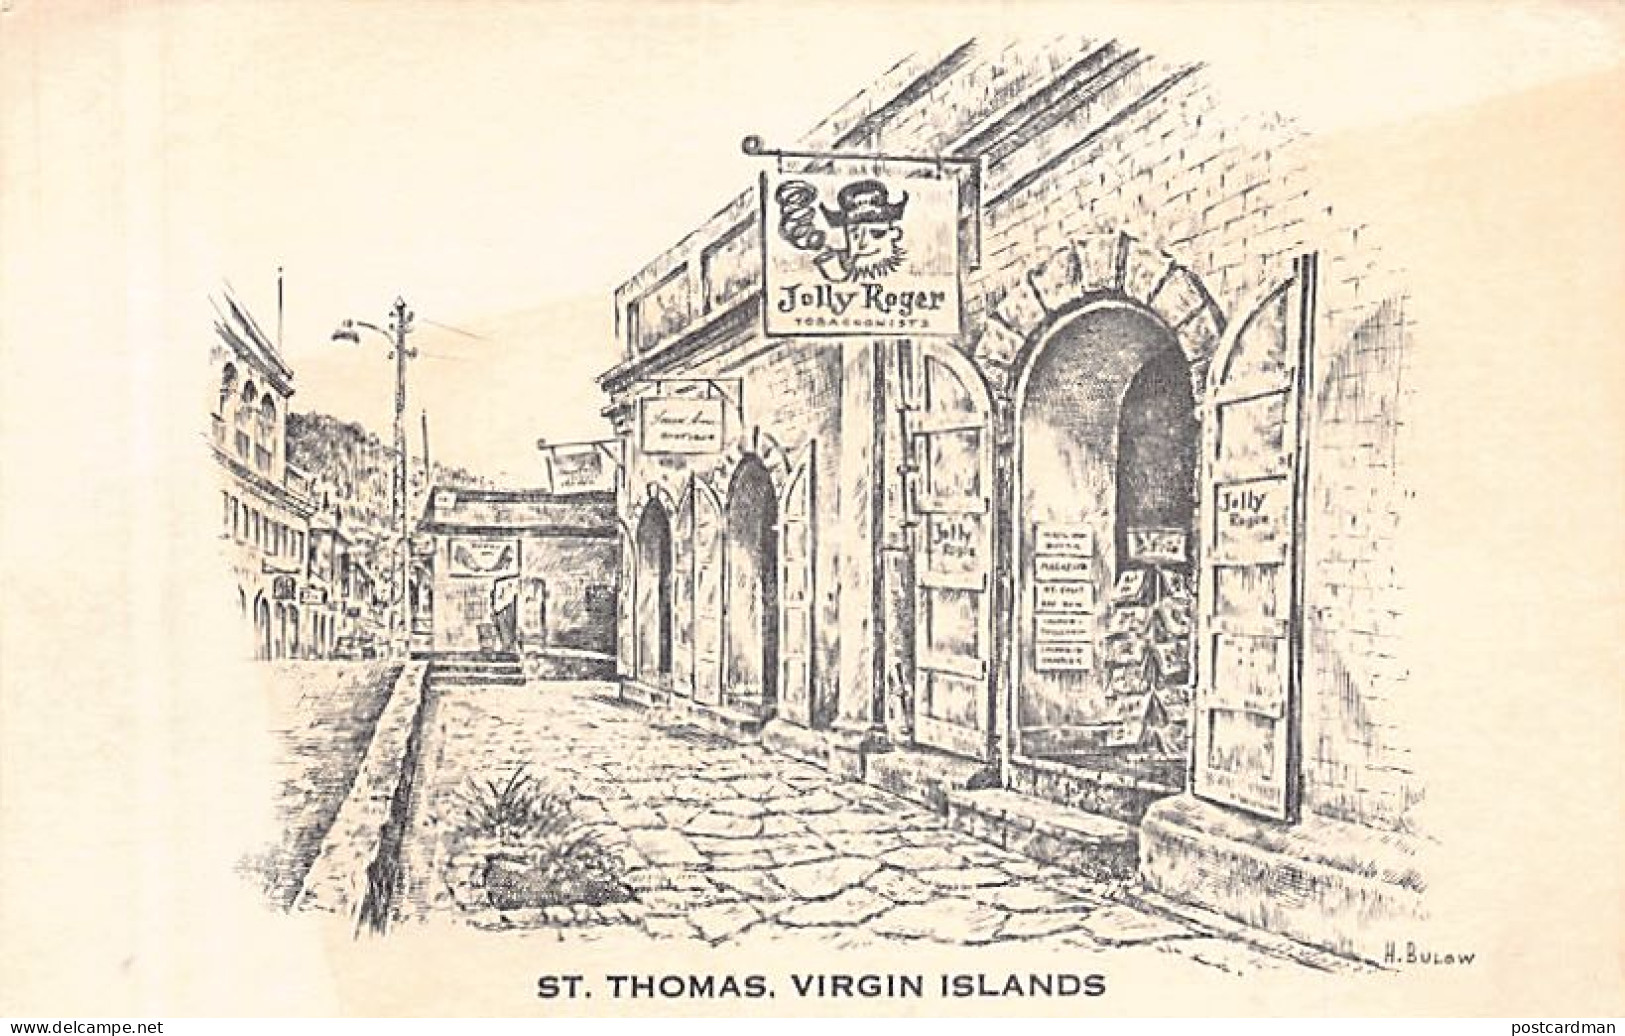 U.S. Virgin Islands - ST. THOMAS - Jolly Roger - Tobacconists - Publ. Hans Bulow  - Virgin Islands, US